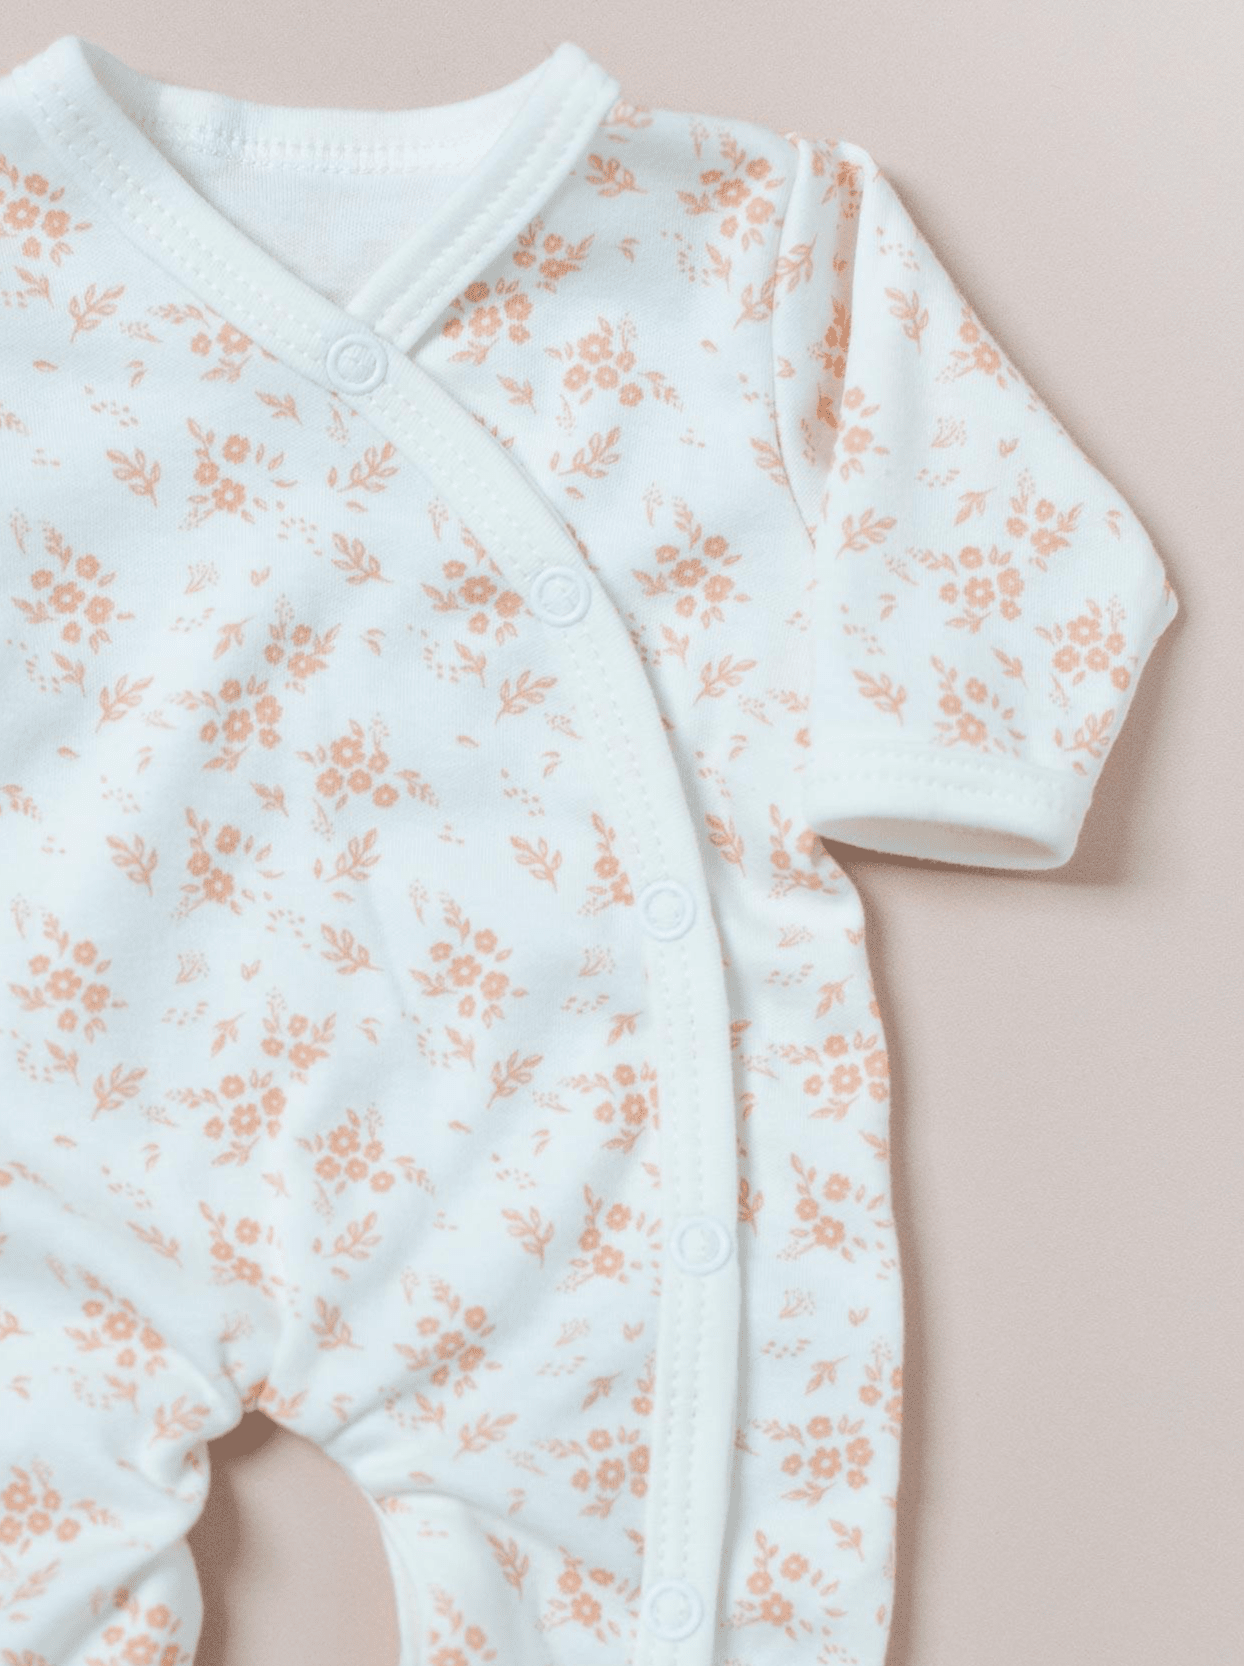 Sleepsuit, Apricot Floral, Premium 100% Organic Cotton Sleepsuit / Babygrow Tiny & Small 